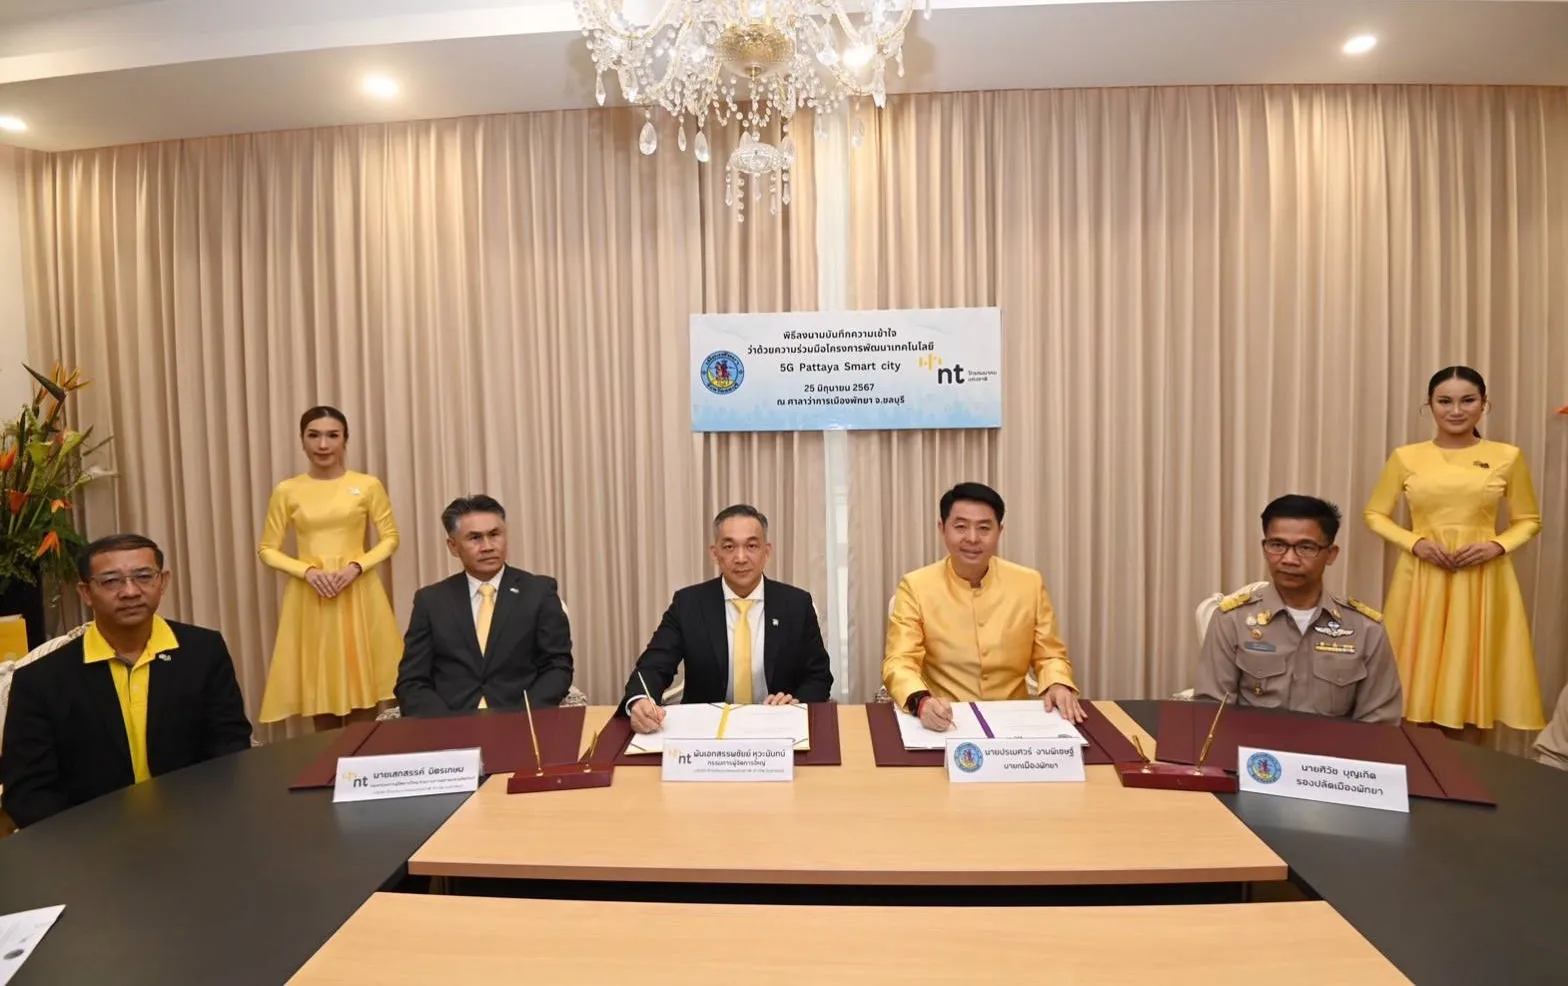 NT จับมือ เมืองพัทยา พัฒนา 5G Pattaya Smart City  นำ 5G ยกระดับการบริหารจัดการเมืองและส่งเสริมความน่าอยู่ของเมืองพัทยา